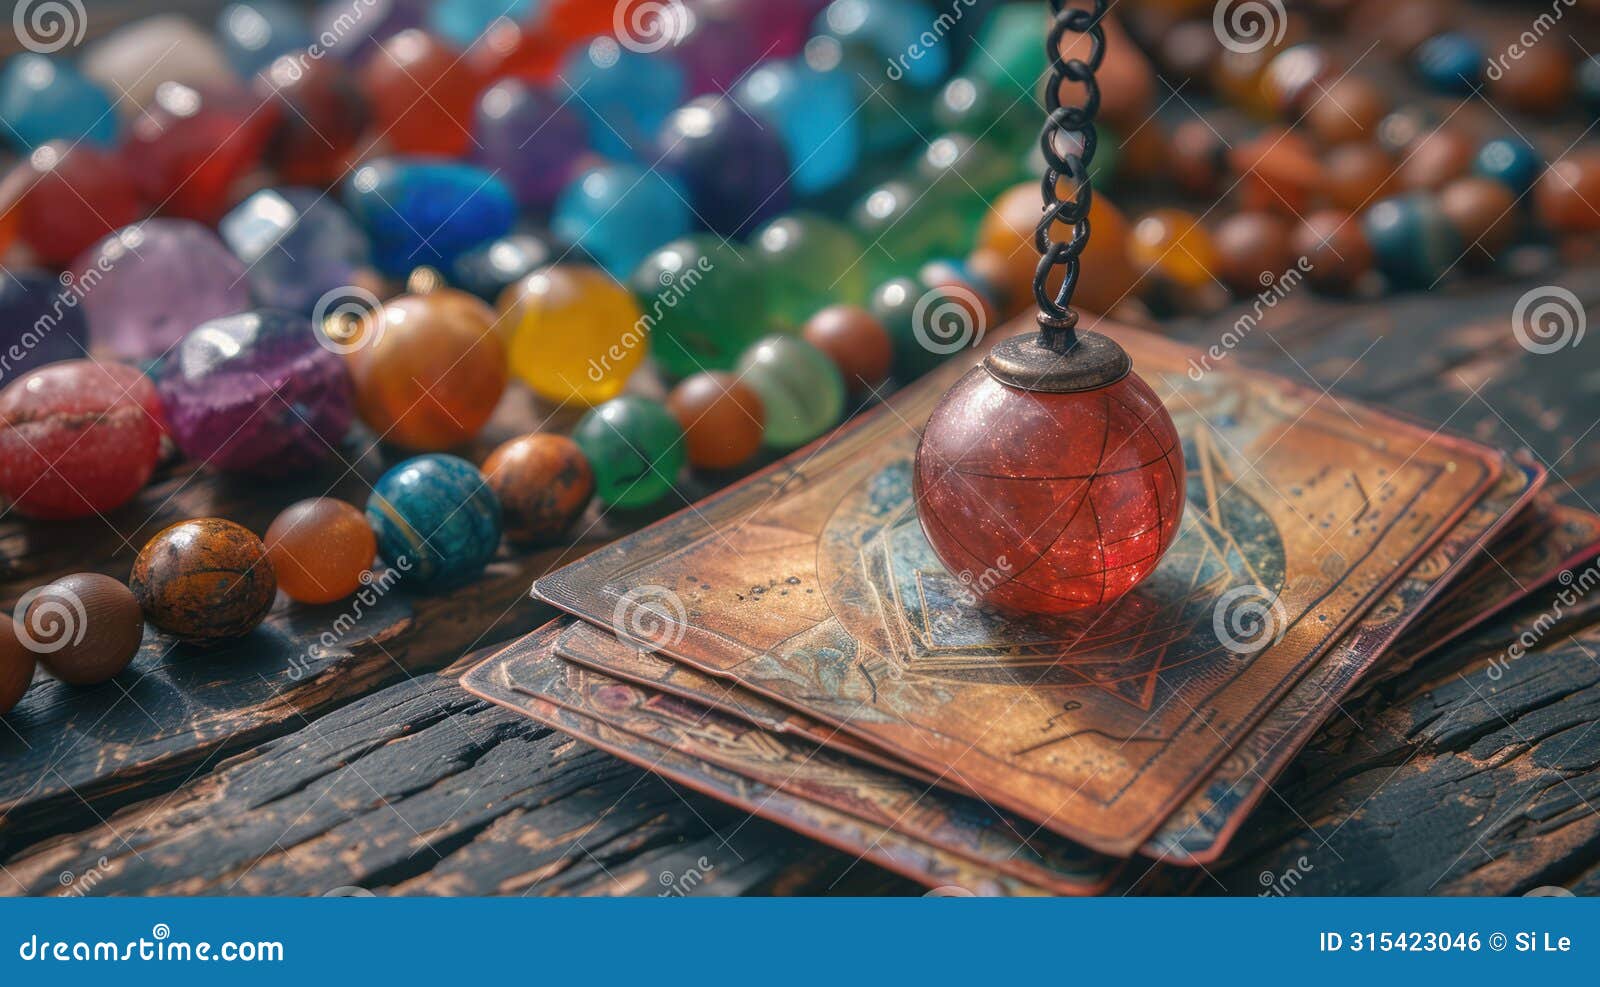 mystical altar with tarot pendulum, defocused cards, and chakra stones for cartomancy and spiritual readings